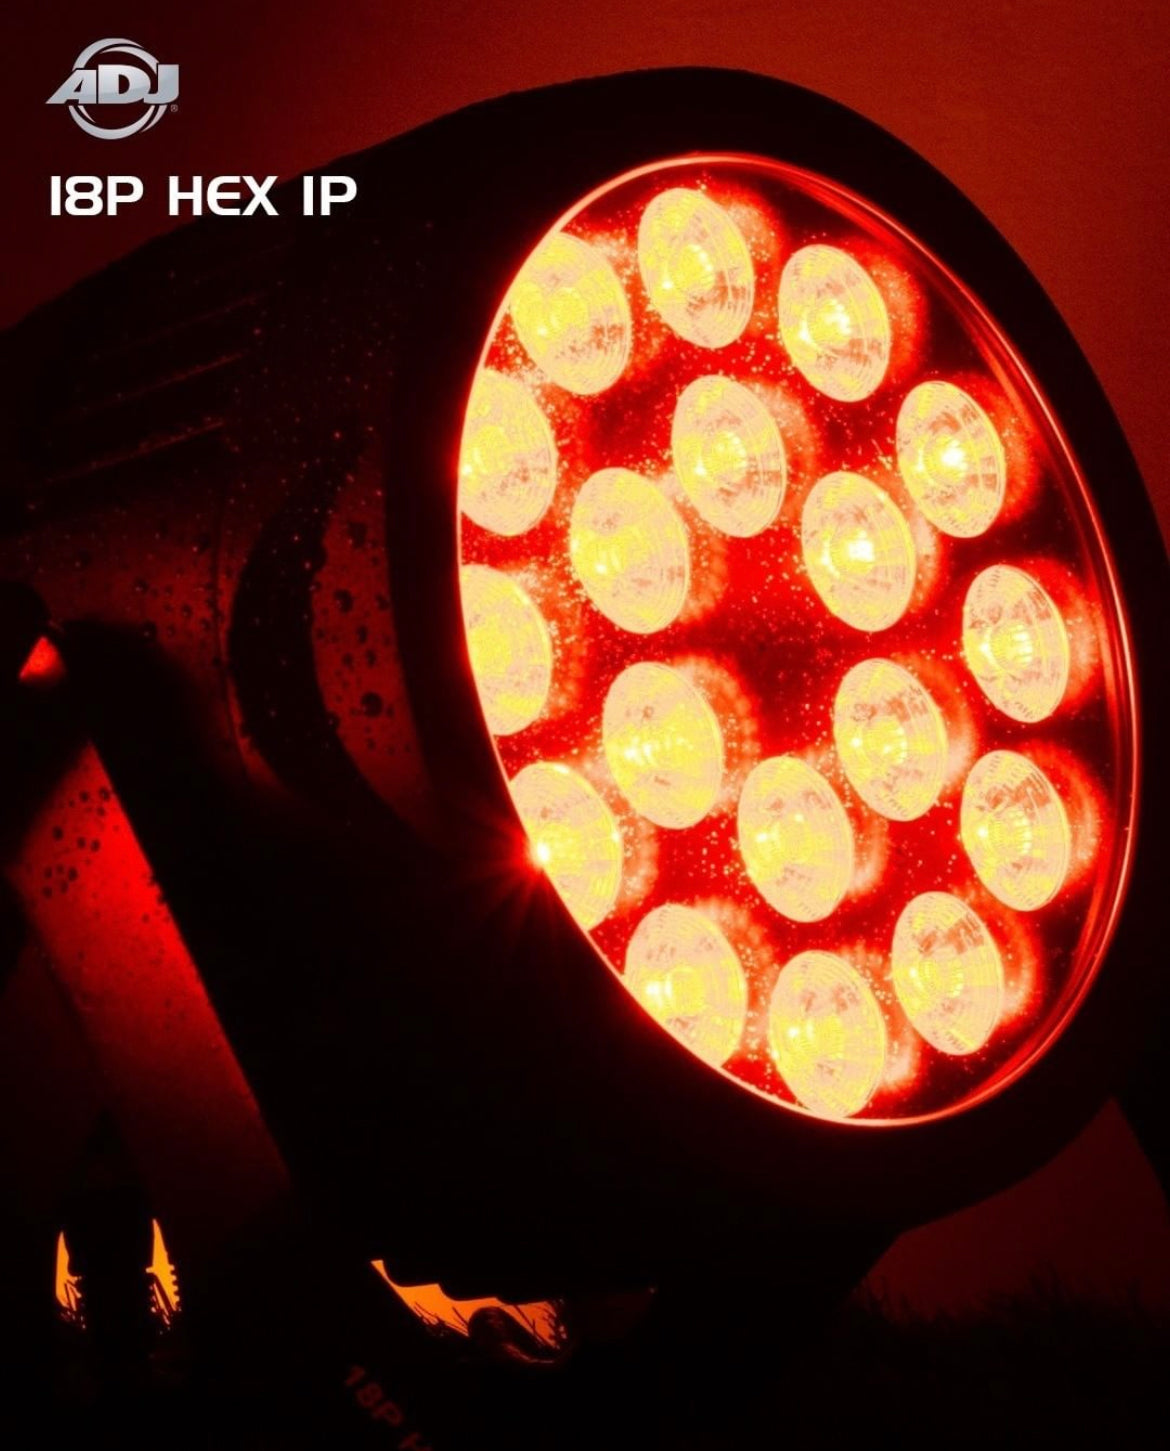 American DJ 18P HEX IP Heavy-Duty High-Powered IP65 rated Par